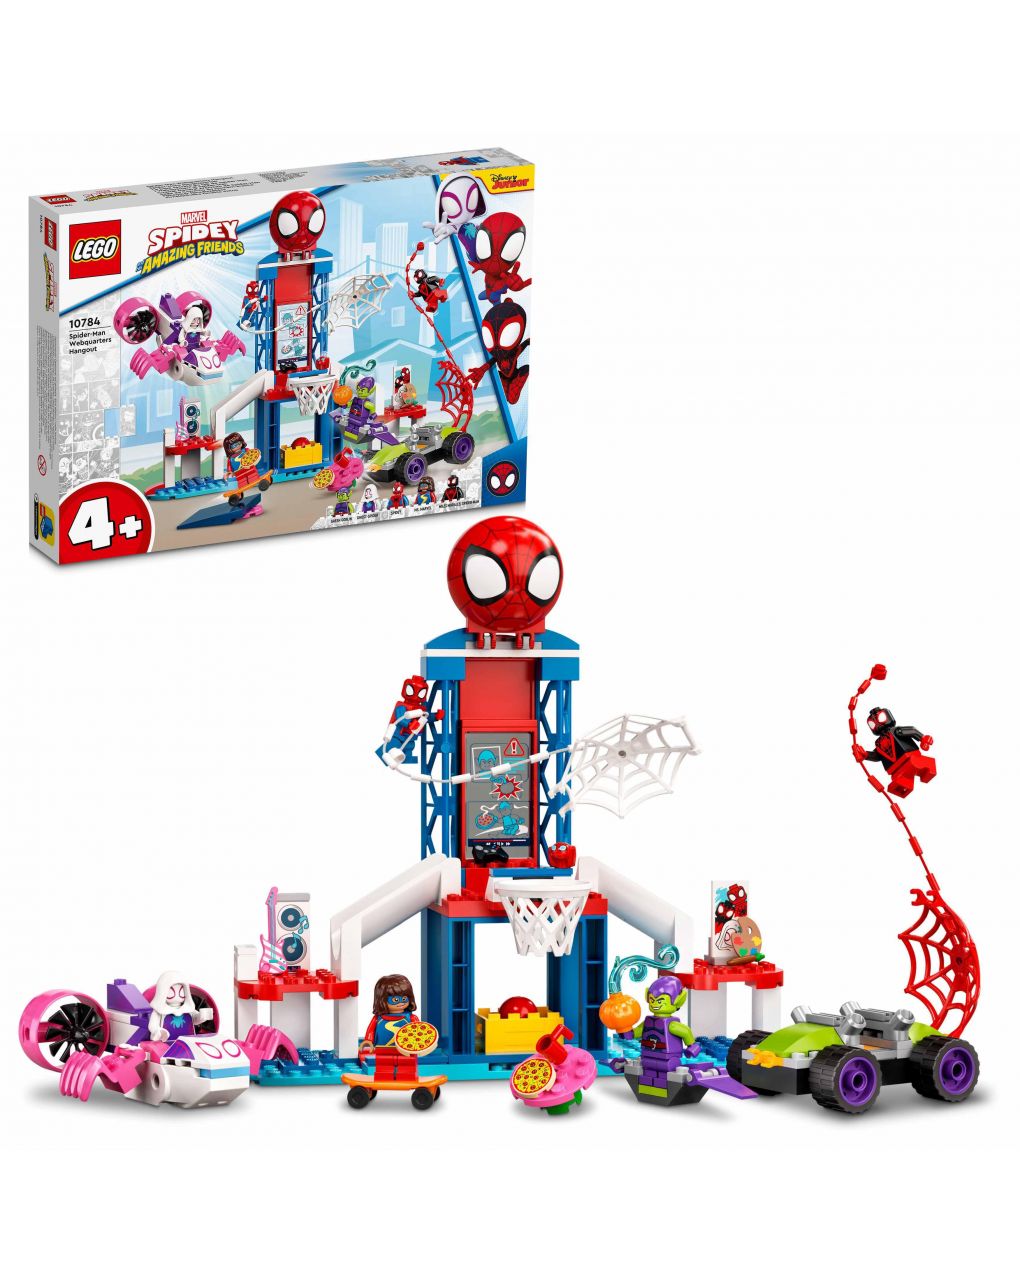 I webquarters di spider-man 10784 - lego marvel super heroes - Spidey